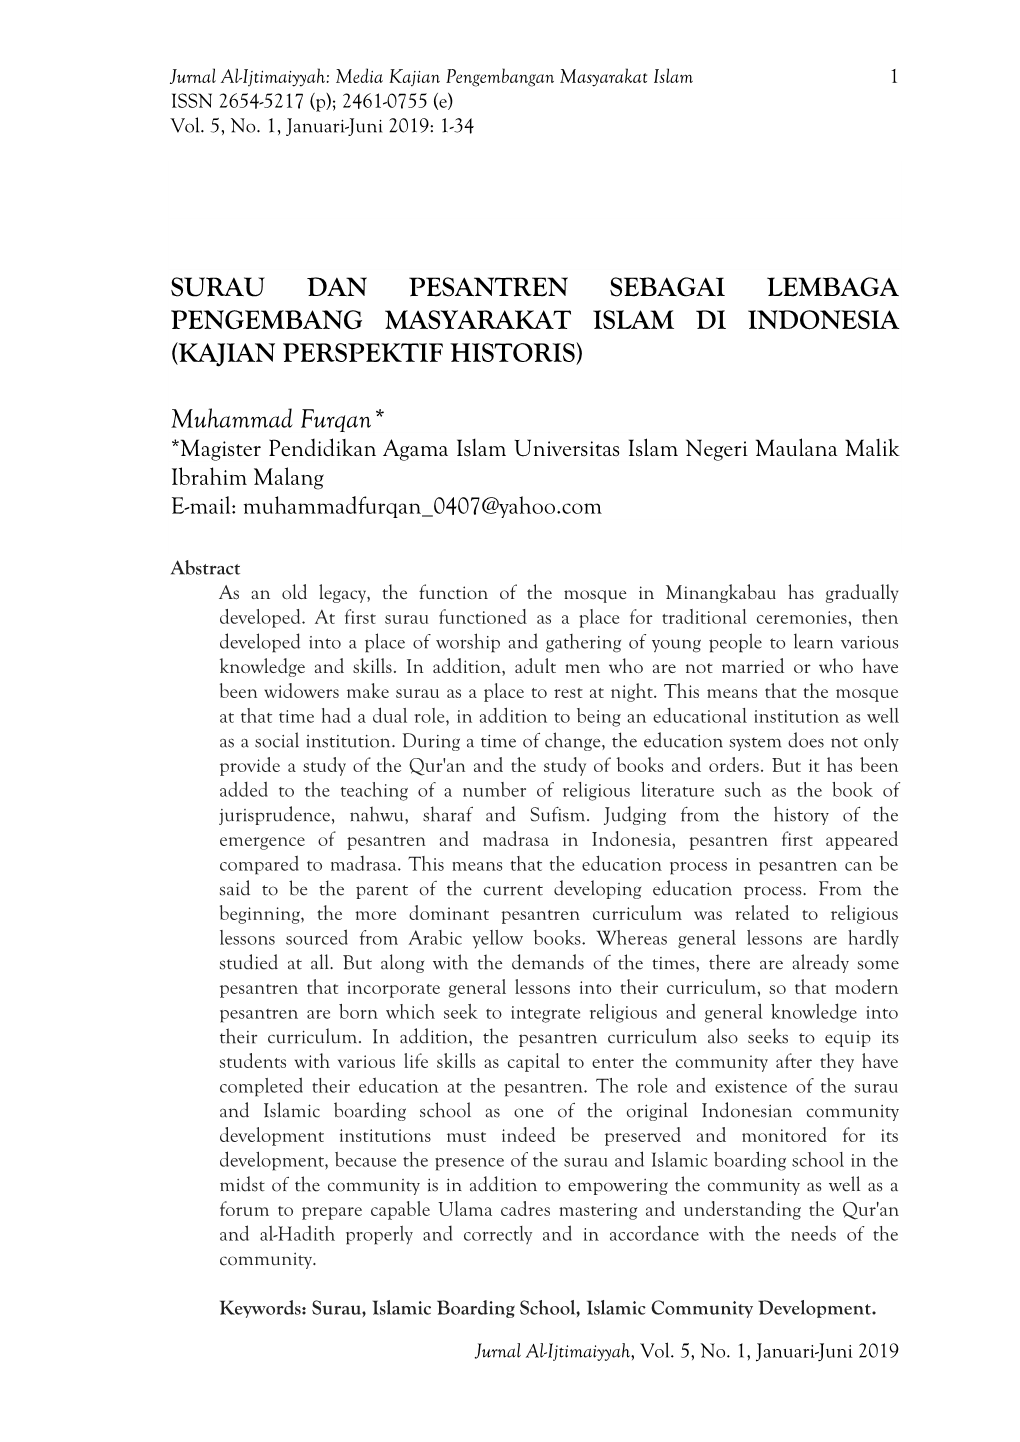 Surau Dan Pesantren Sebagai Lembaga Pengembang Masyarakat Islam Di Indonesia (Kajian Perspektif Historis)